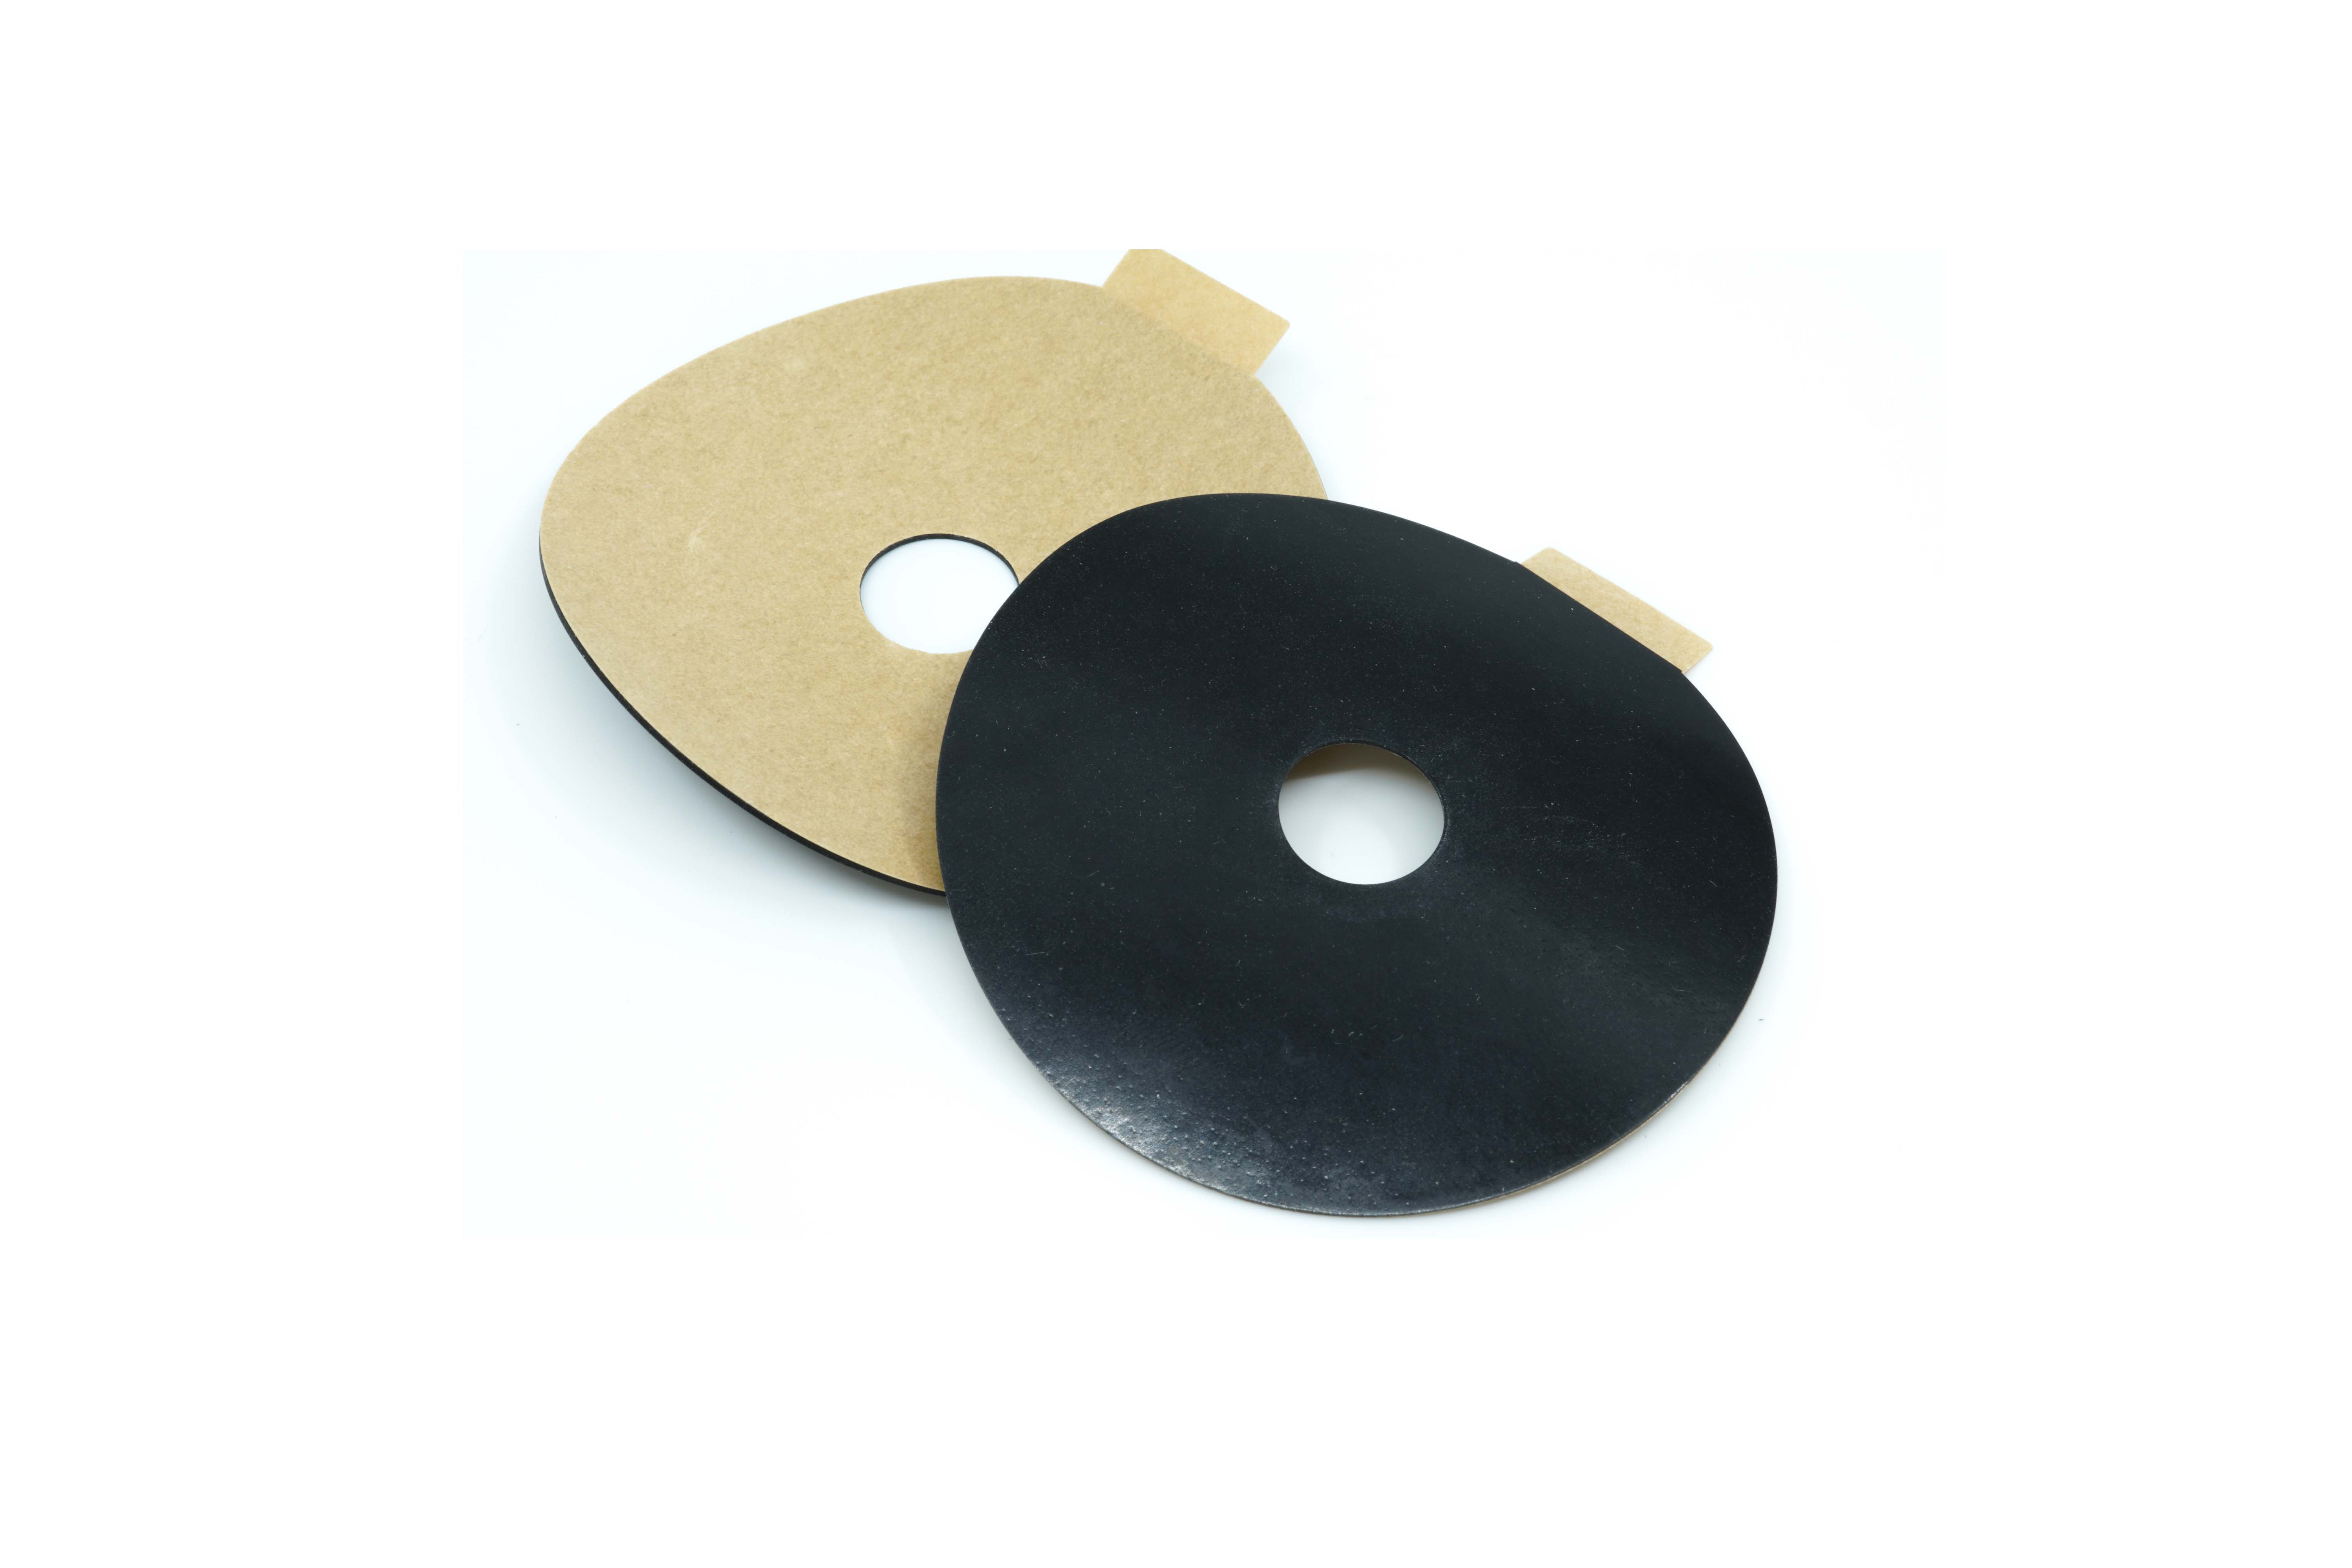 <ul><li>Adhesive compact rubber to ensure air tightness&nbsp; </li></ul>